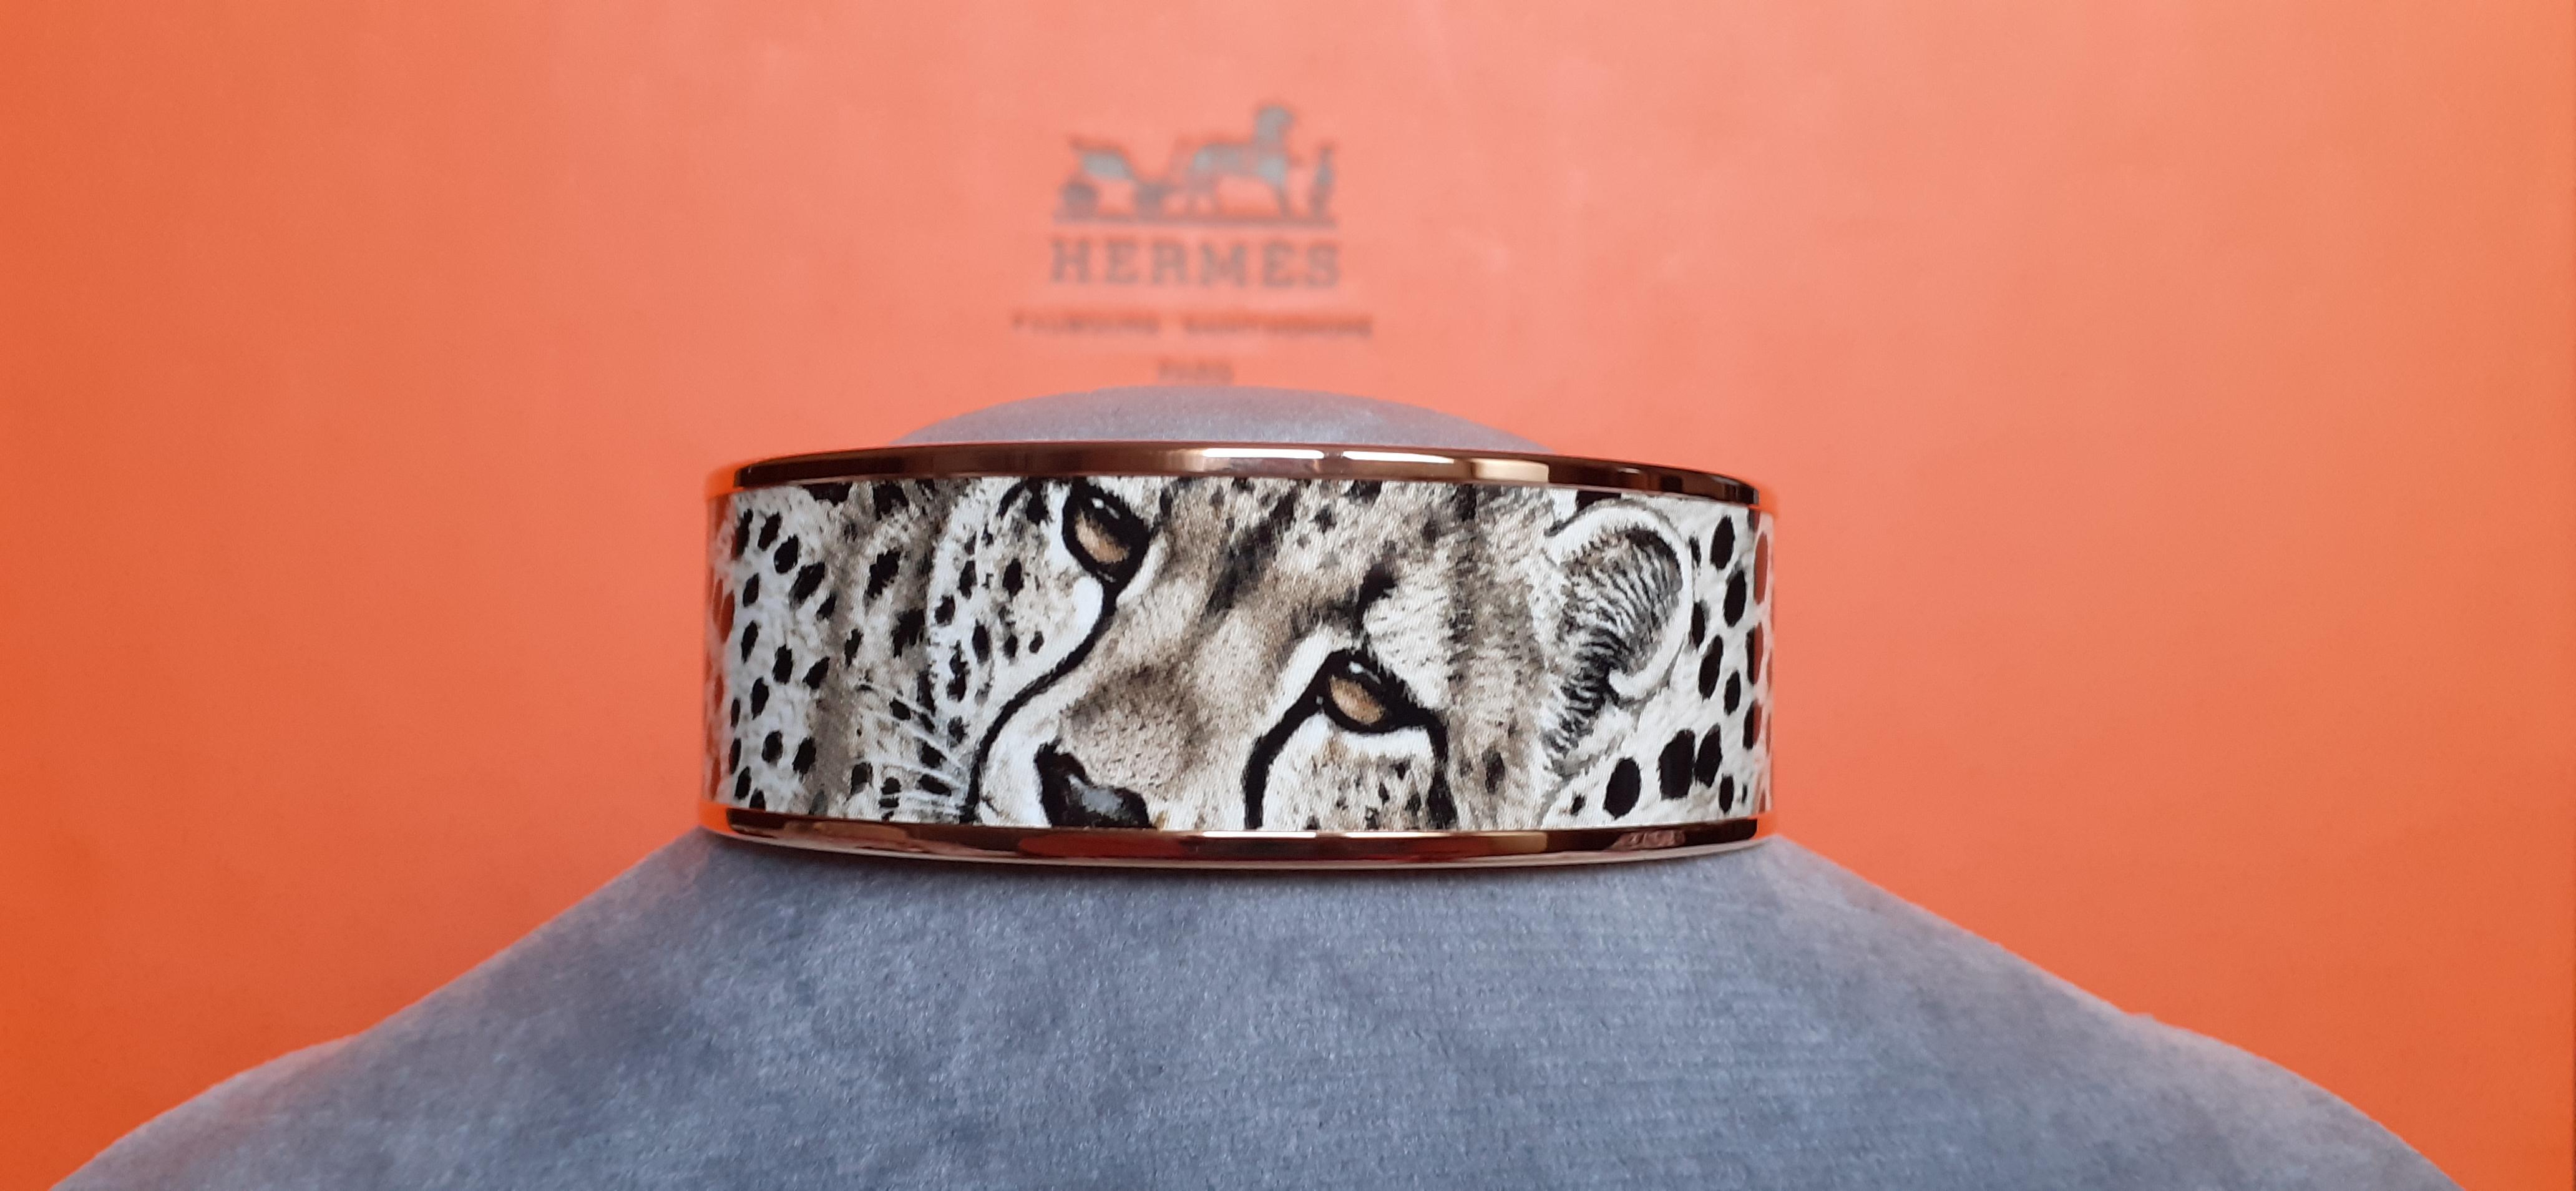 Absolutely Gorgeous Authentic Hermès Bracelet

Print: 